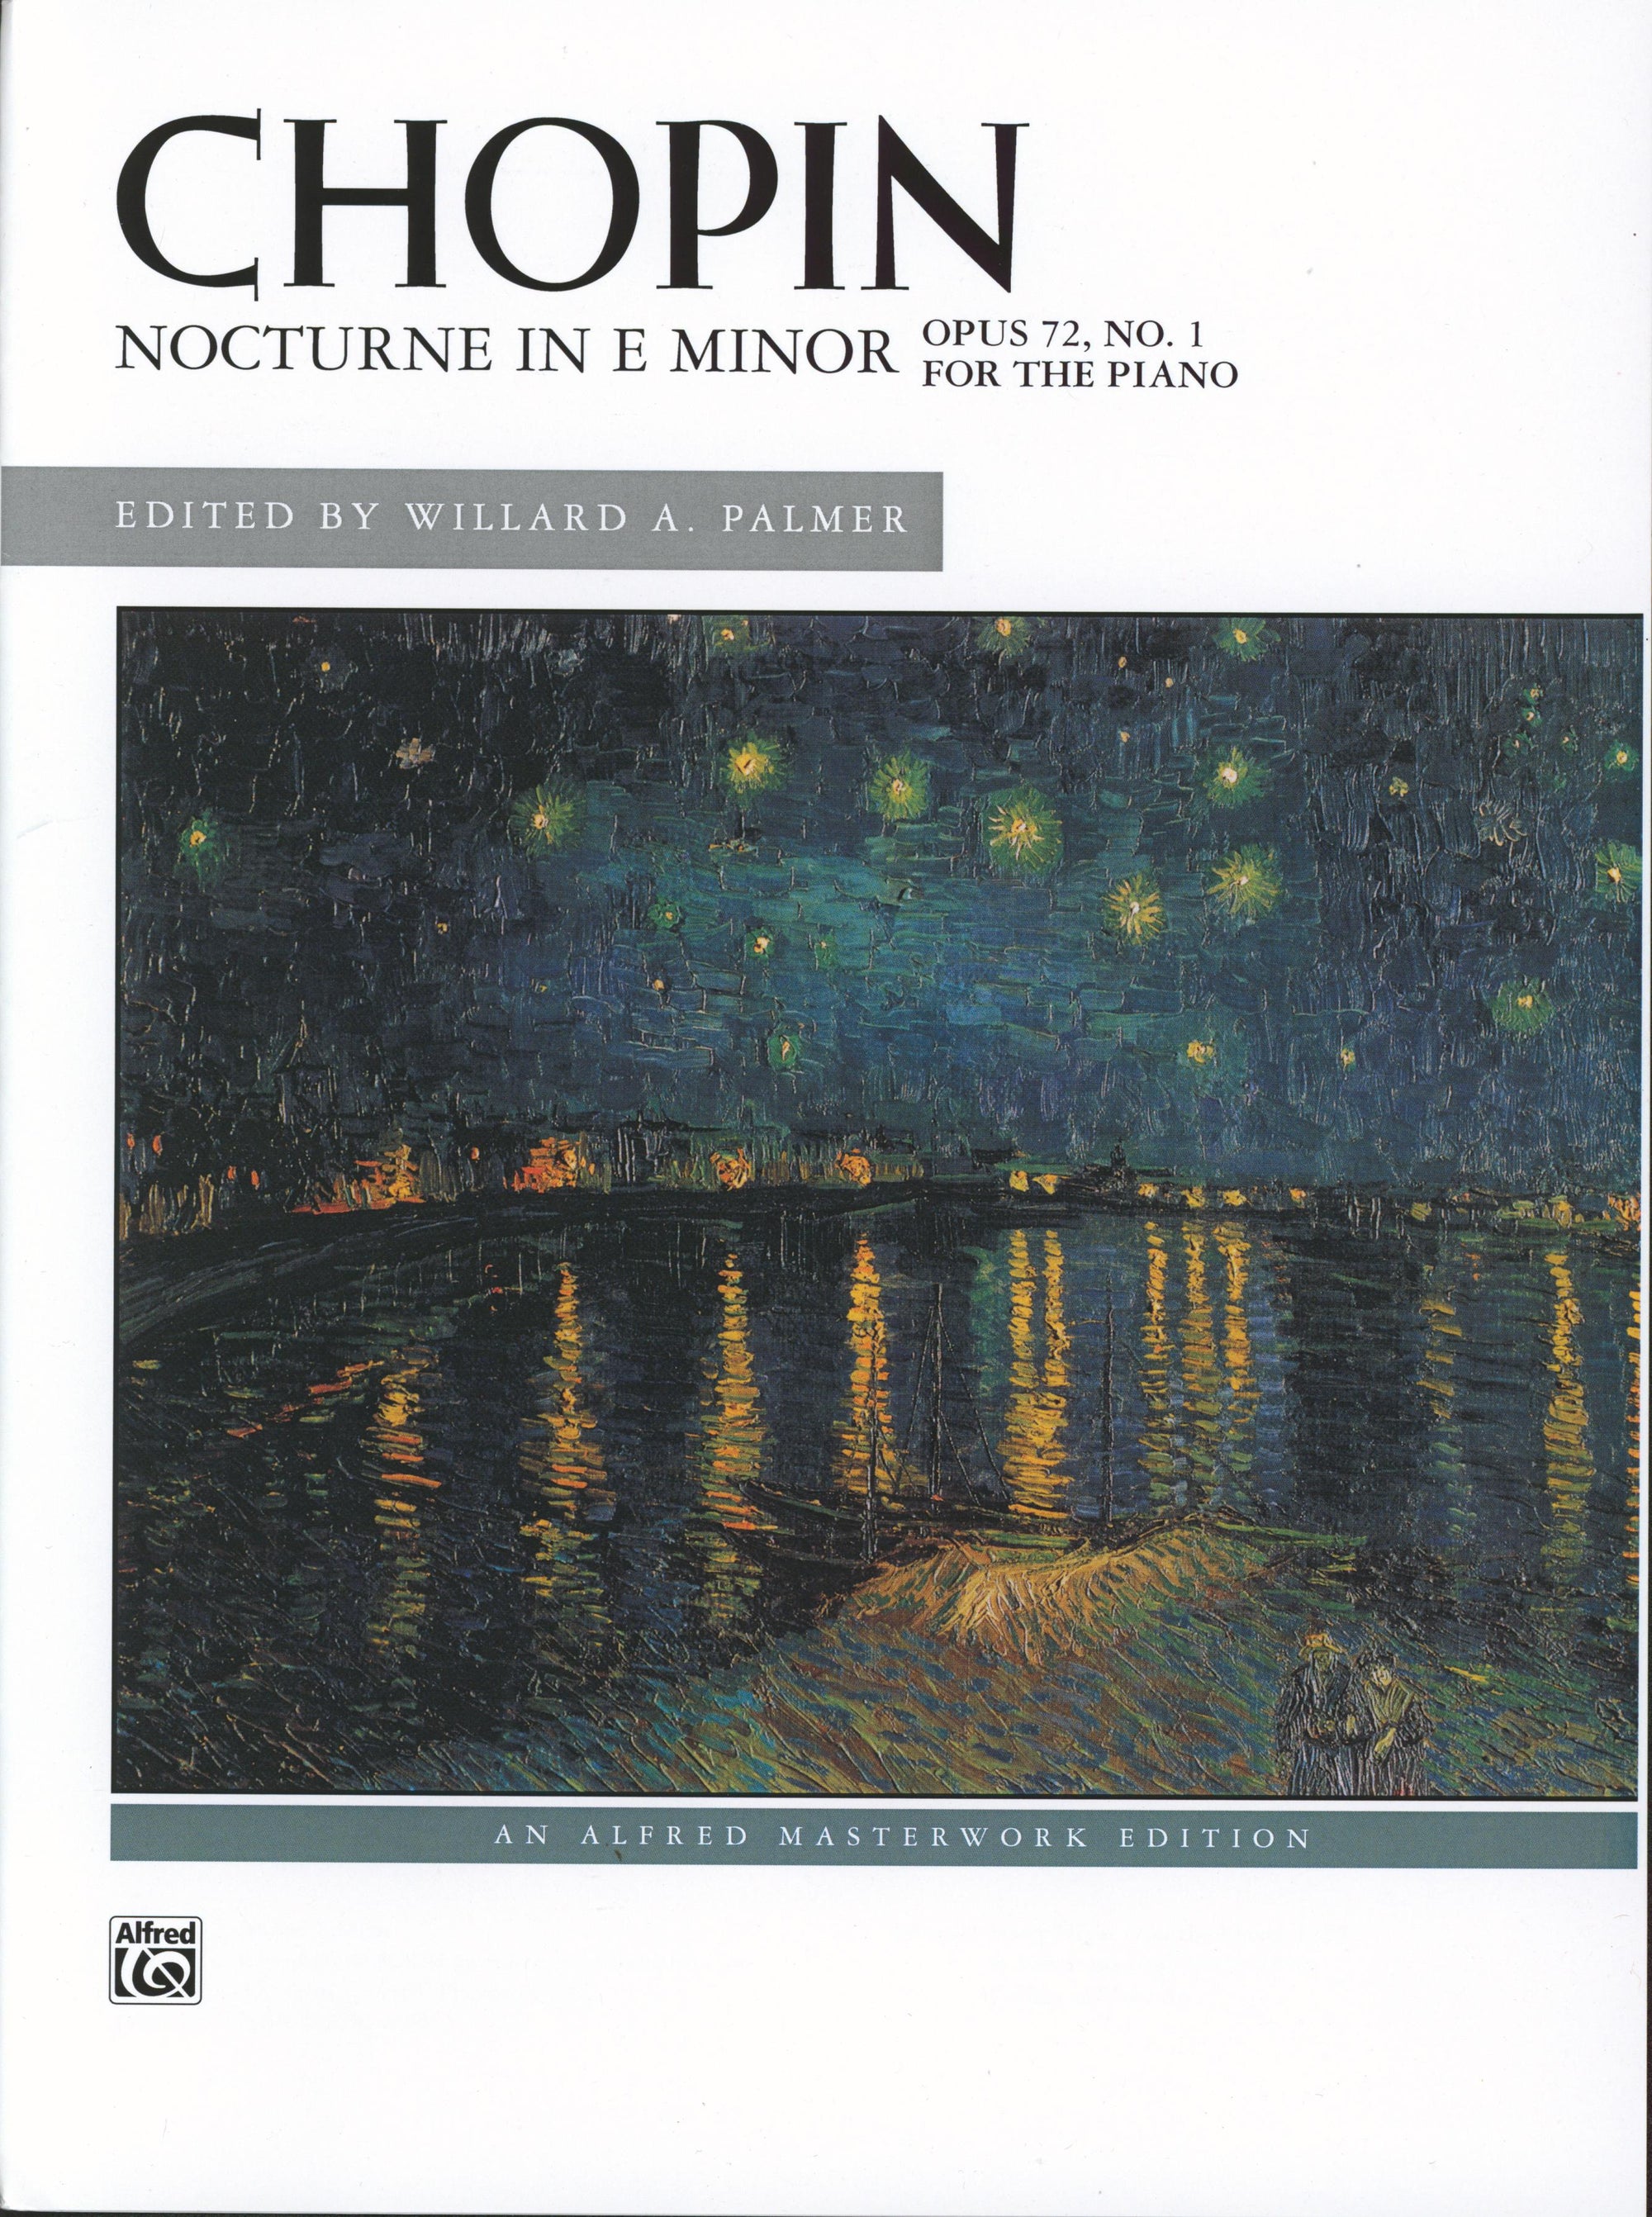 Chopin: Nocturne in E Minor, Op. posth. 72, No. 1